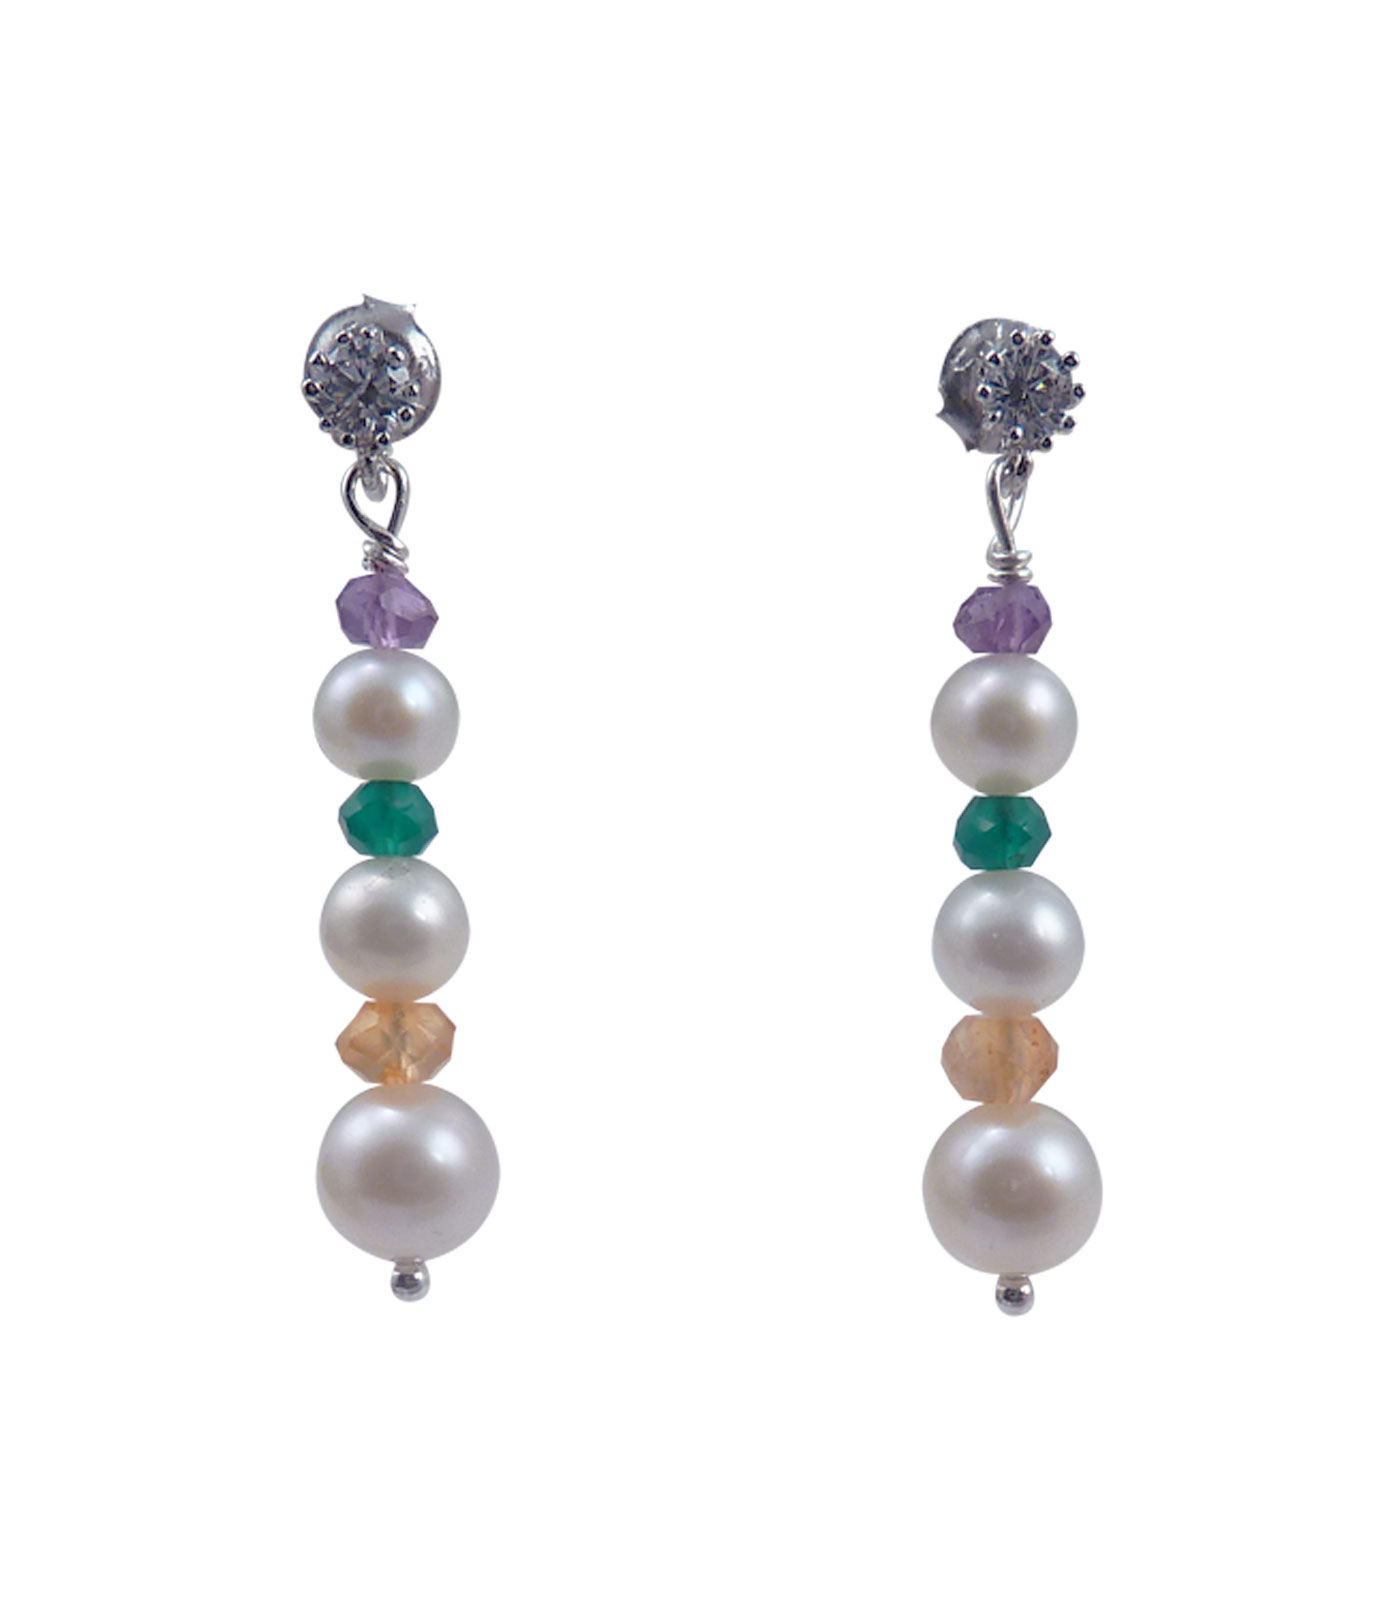 Pearl earrings small white pearls. Modern pearl jewelry